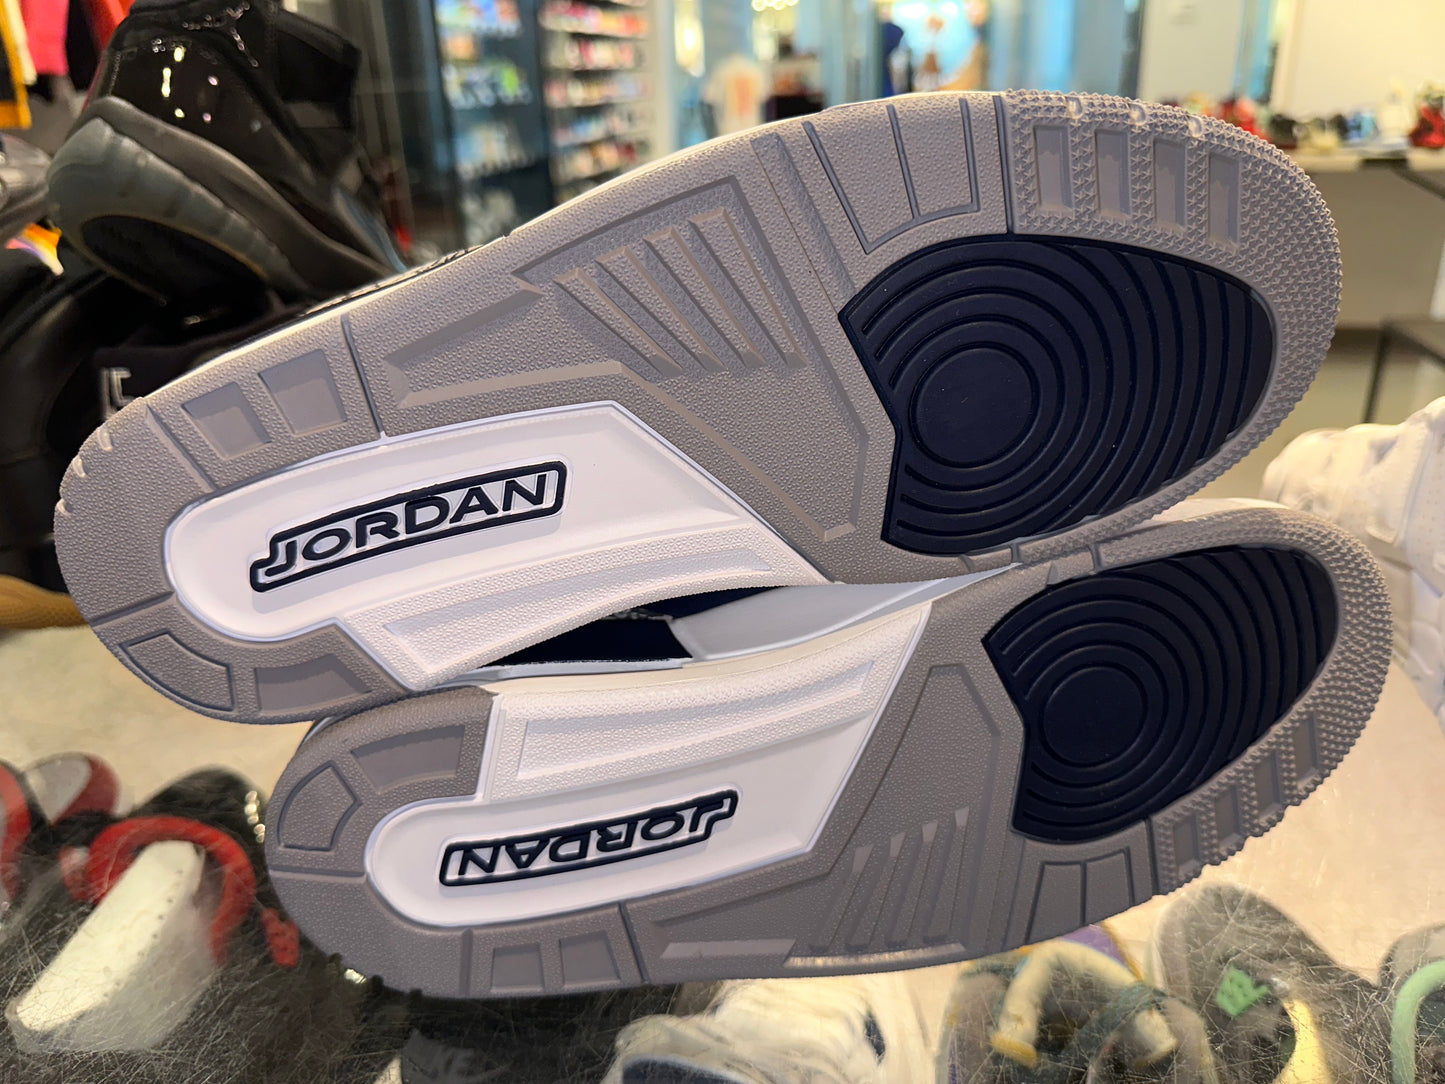 Size 11 Air Jordan 3 “Georgetown” Brand New (Mall)